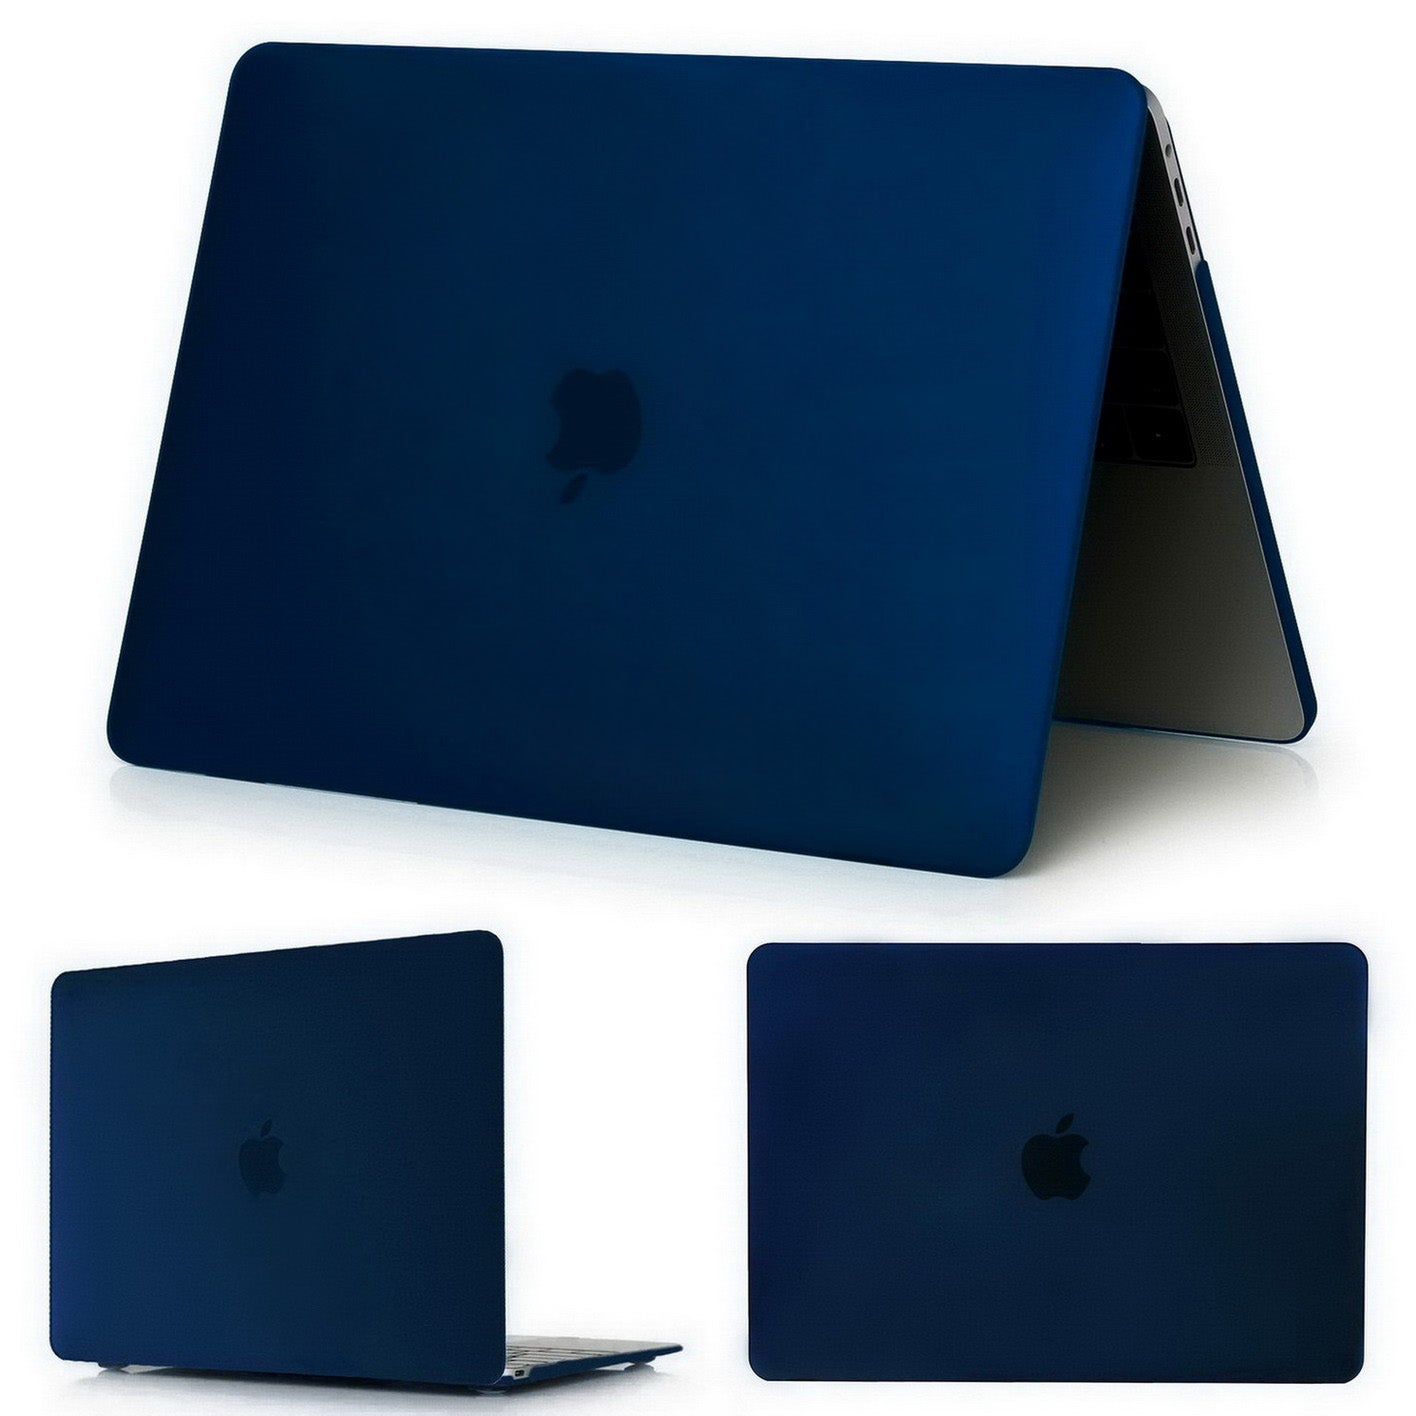 Catzon Matte Case Laptop Case For Apple MacBook Air Pro Retina 11 12 13 15 MacBook 15.4 13.3 12 11.6 inches-Navy Blue